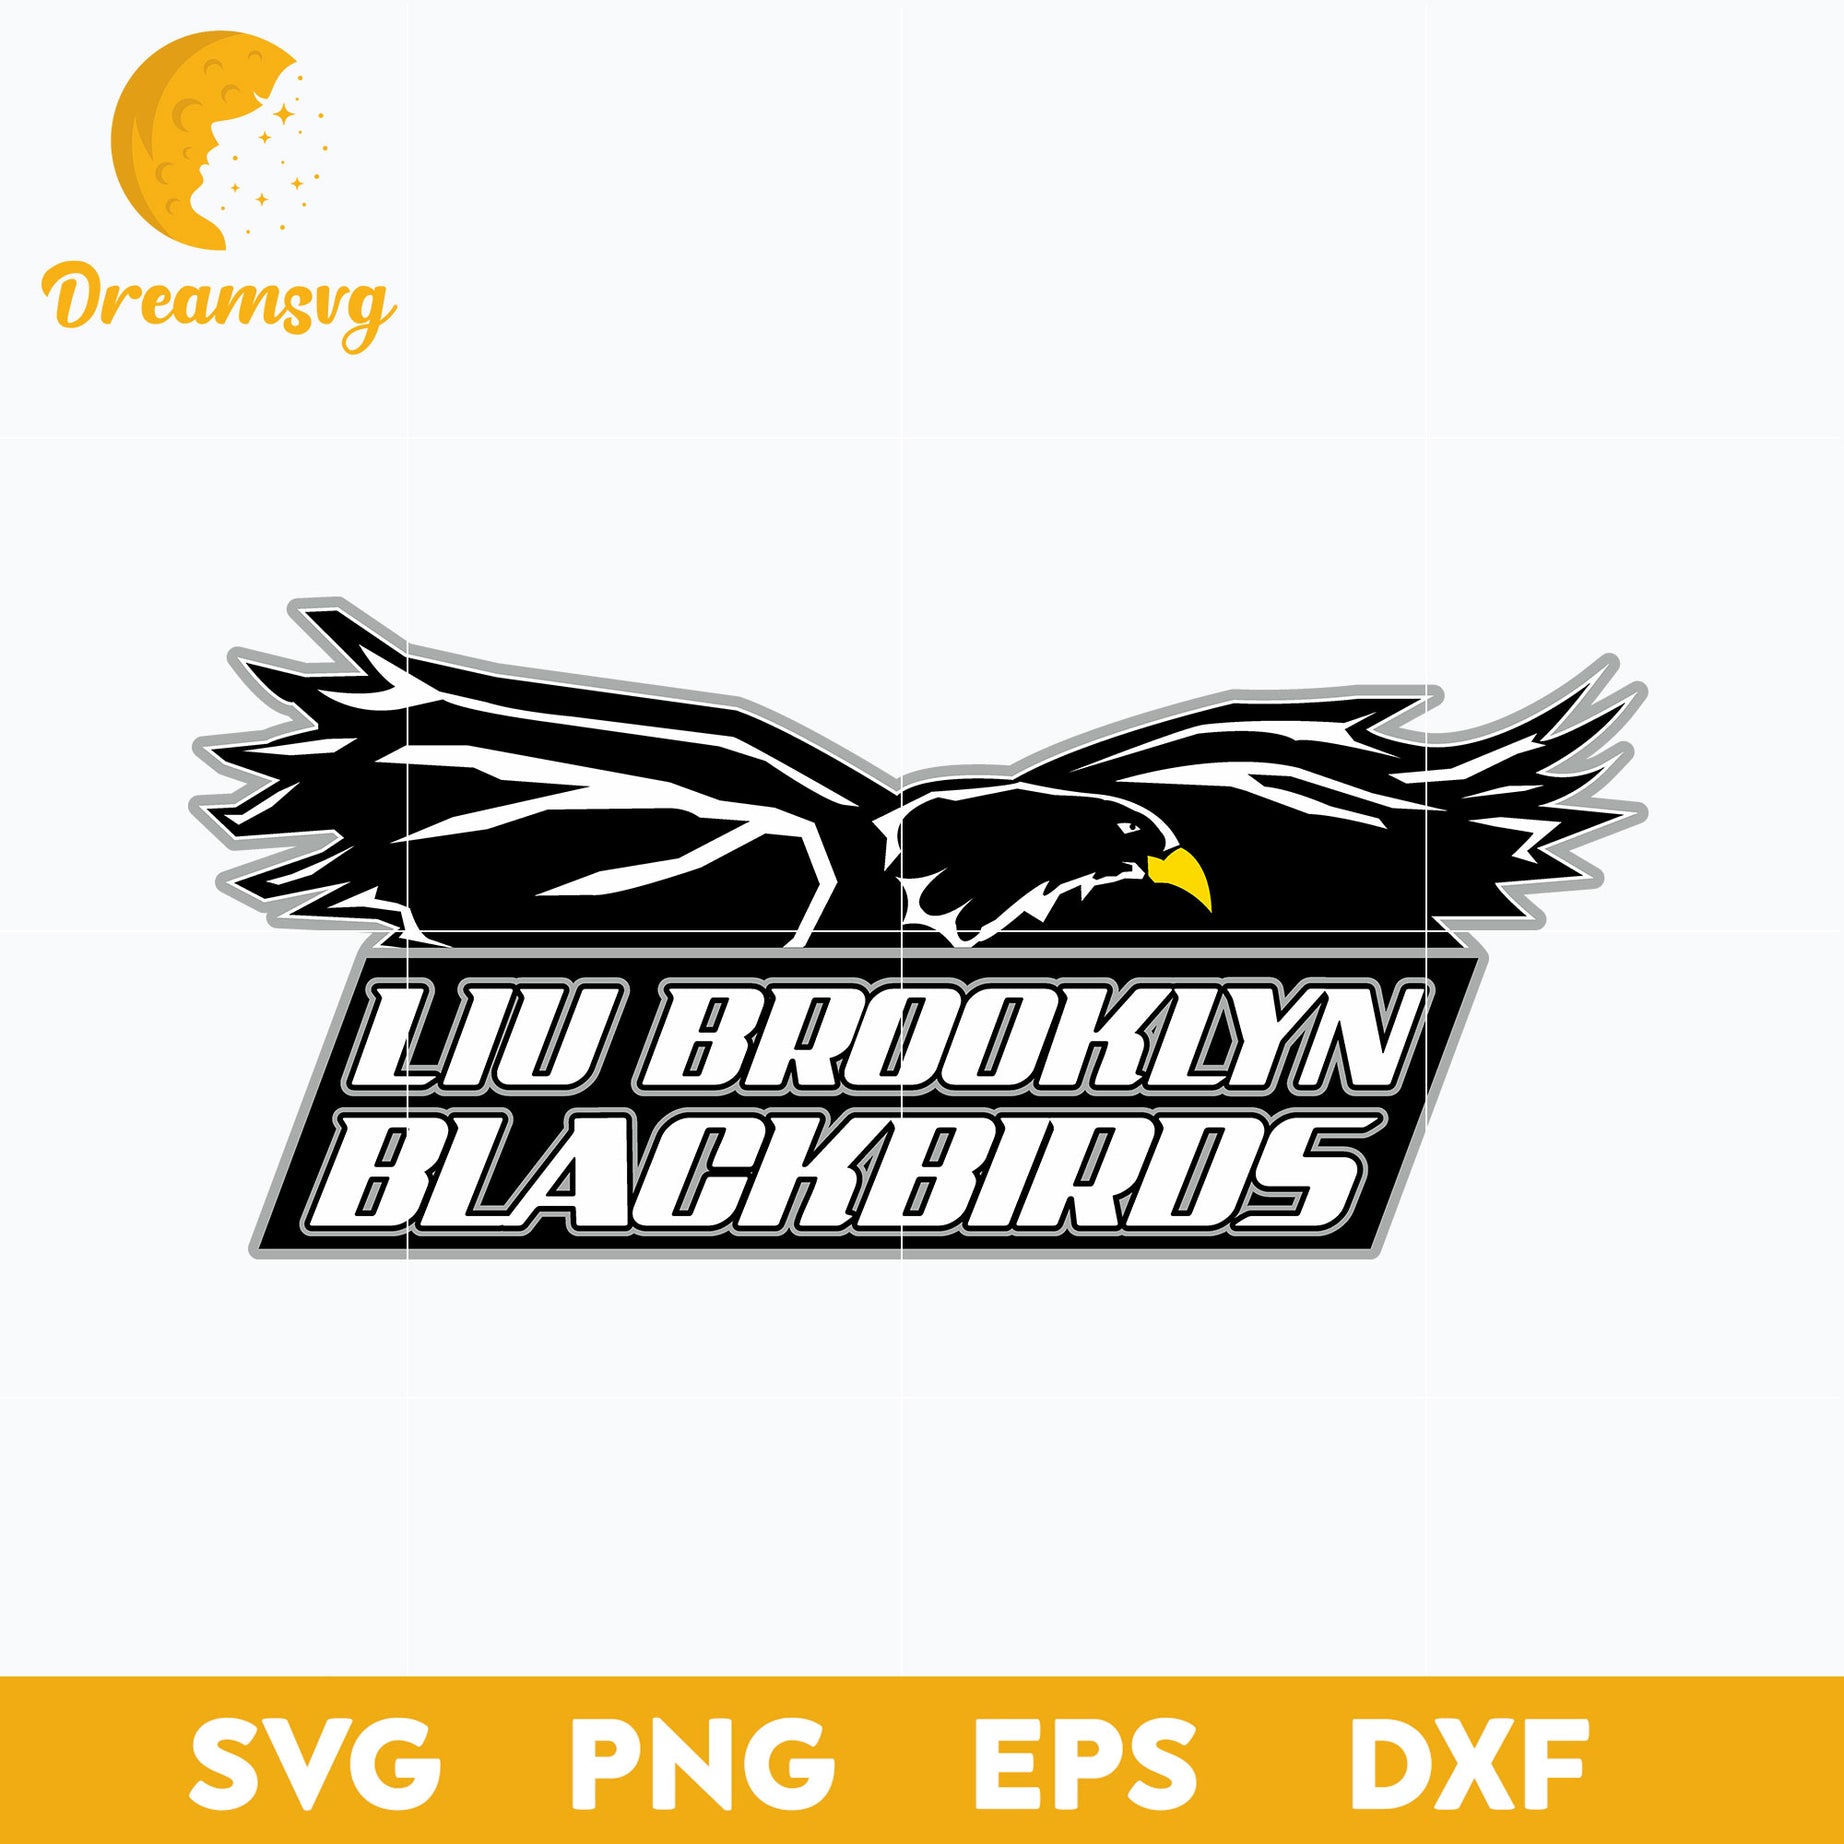 LIU Brooklyn Blackbirds Svg, Logo Ncaa Sport Svg, Ncaa Svg, Png, Dxf, Eps Download File.